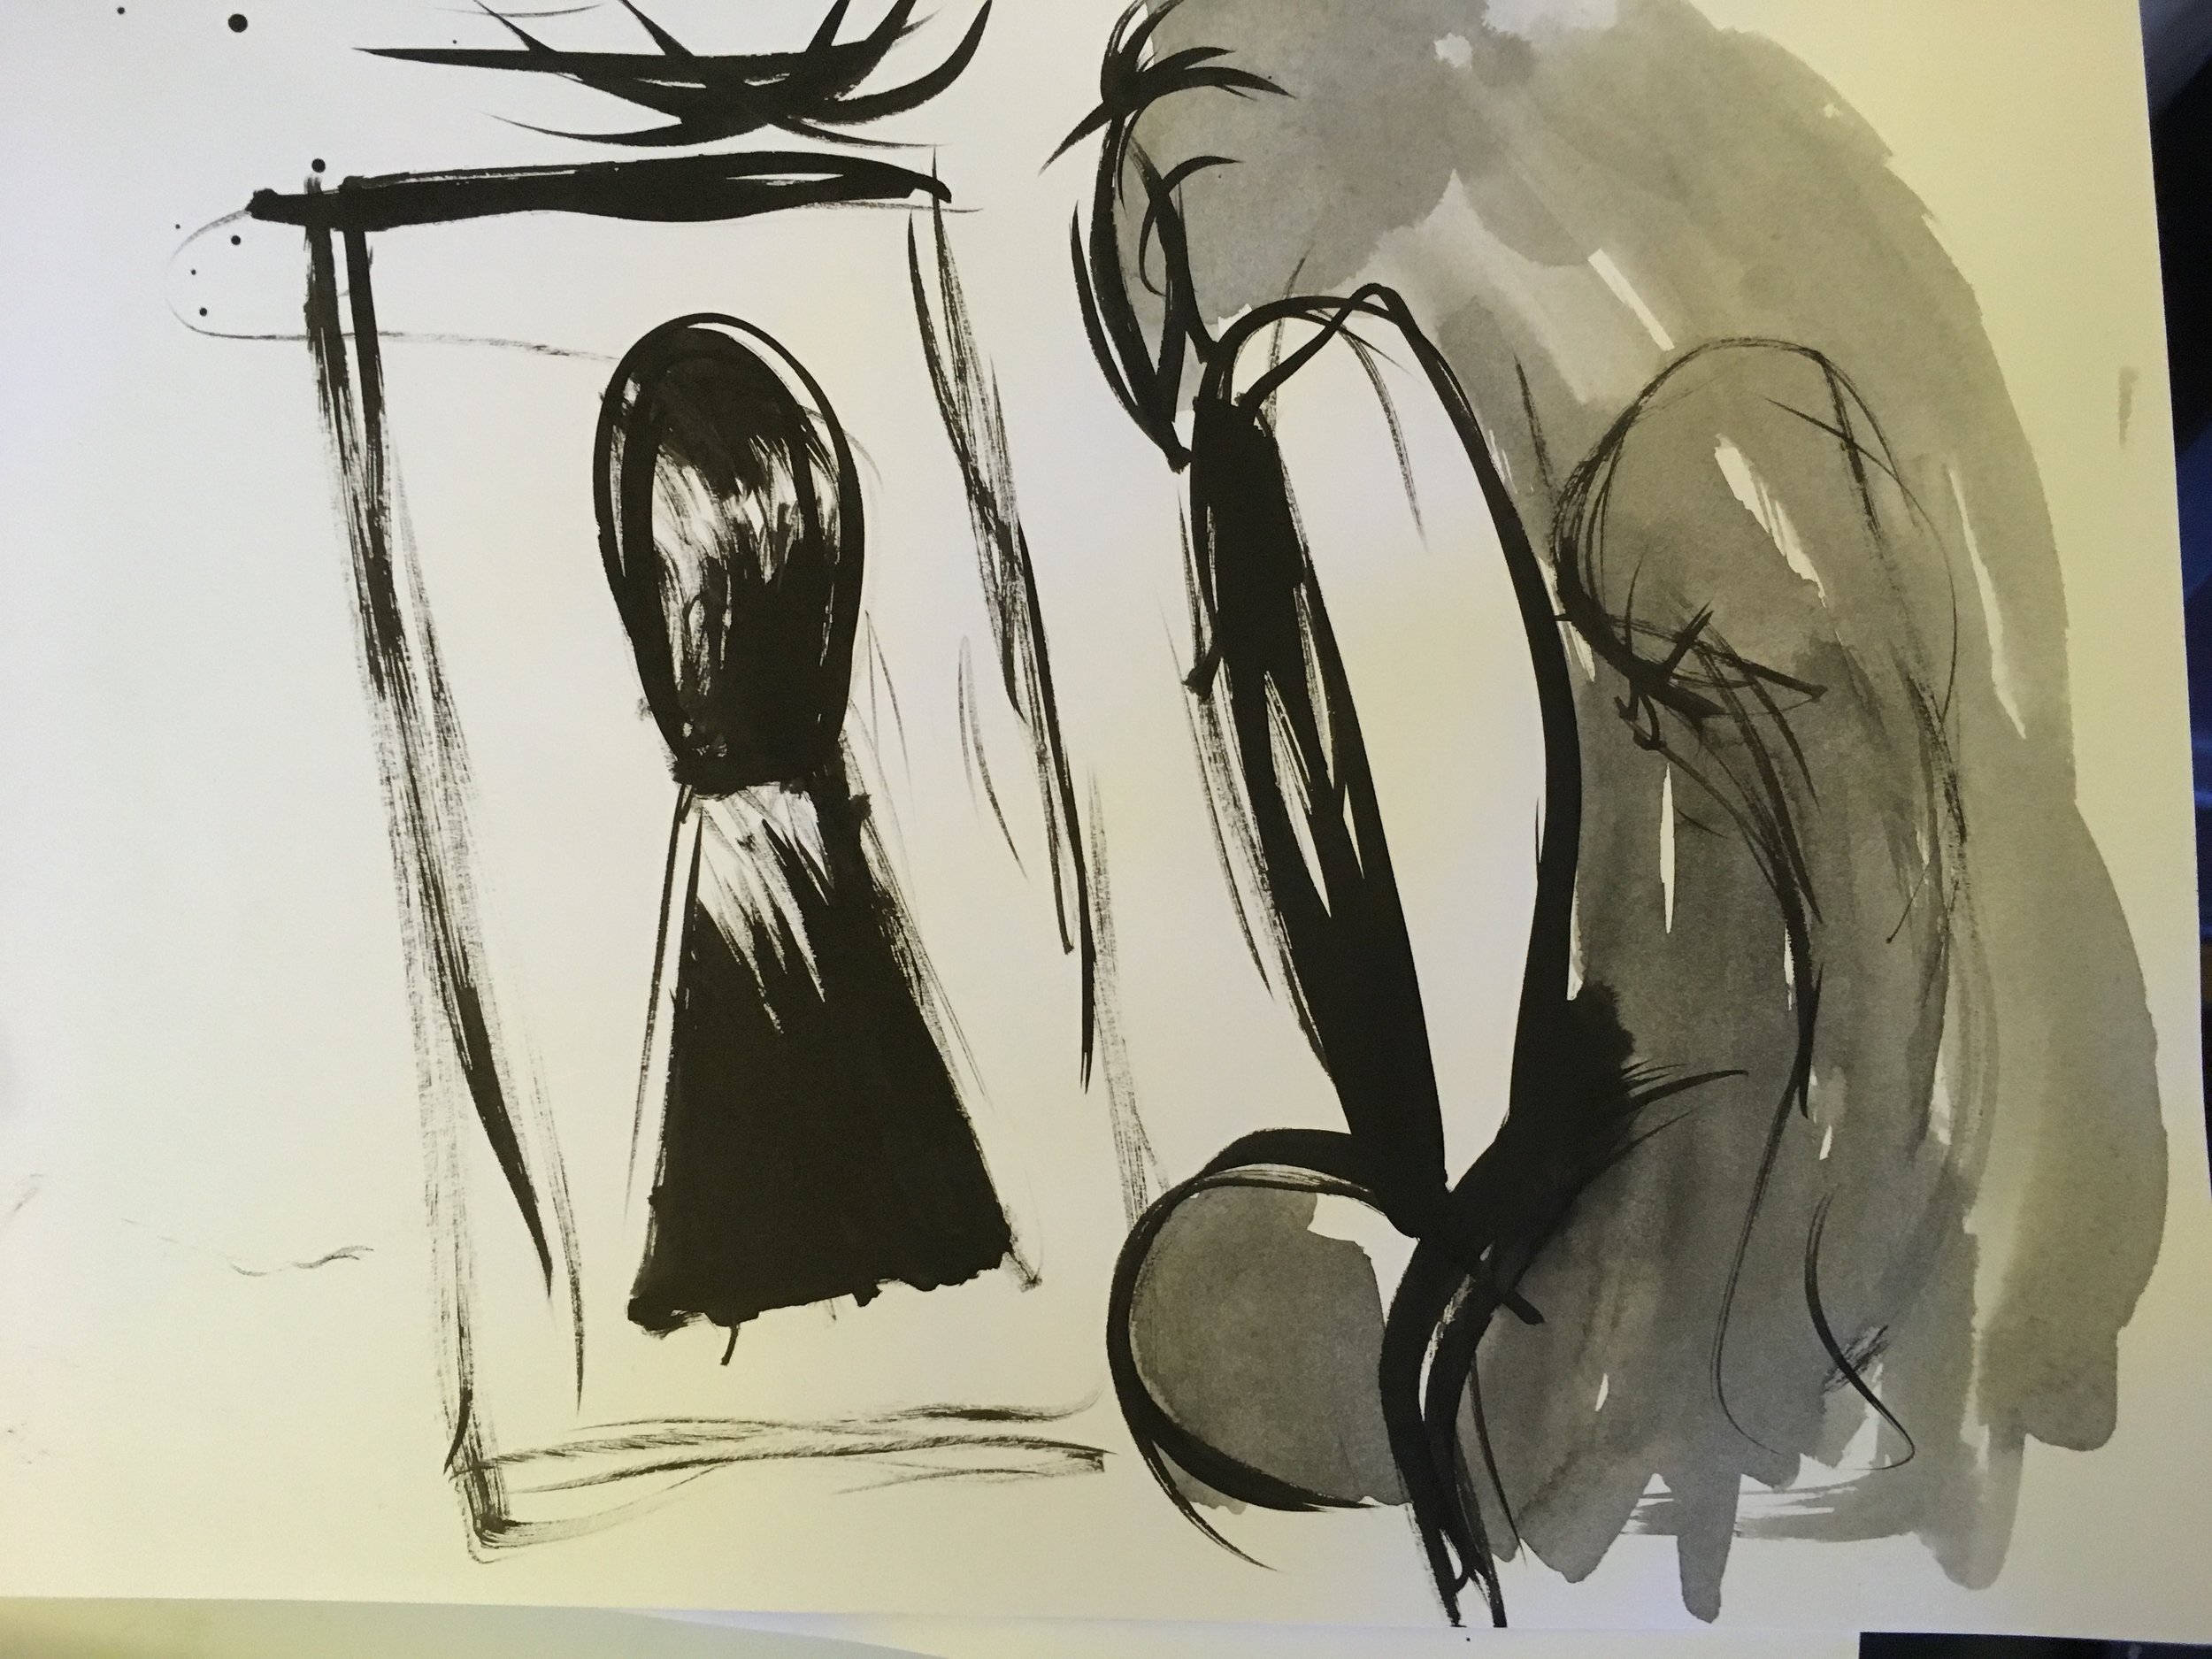  Elliott Jamal Robbins From Cartoon Series Untitled #1 11” x 8.5” Sumi Ink on Paper 2018 